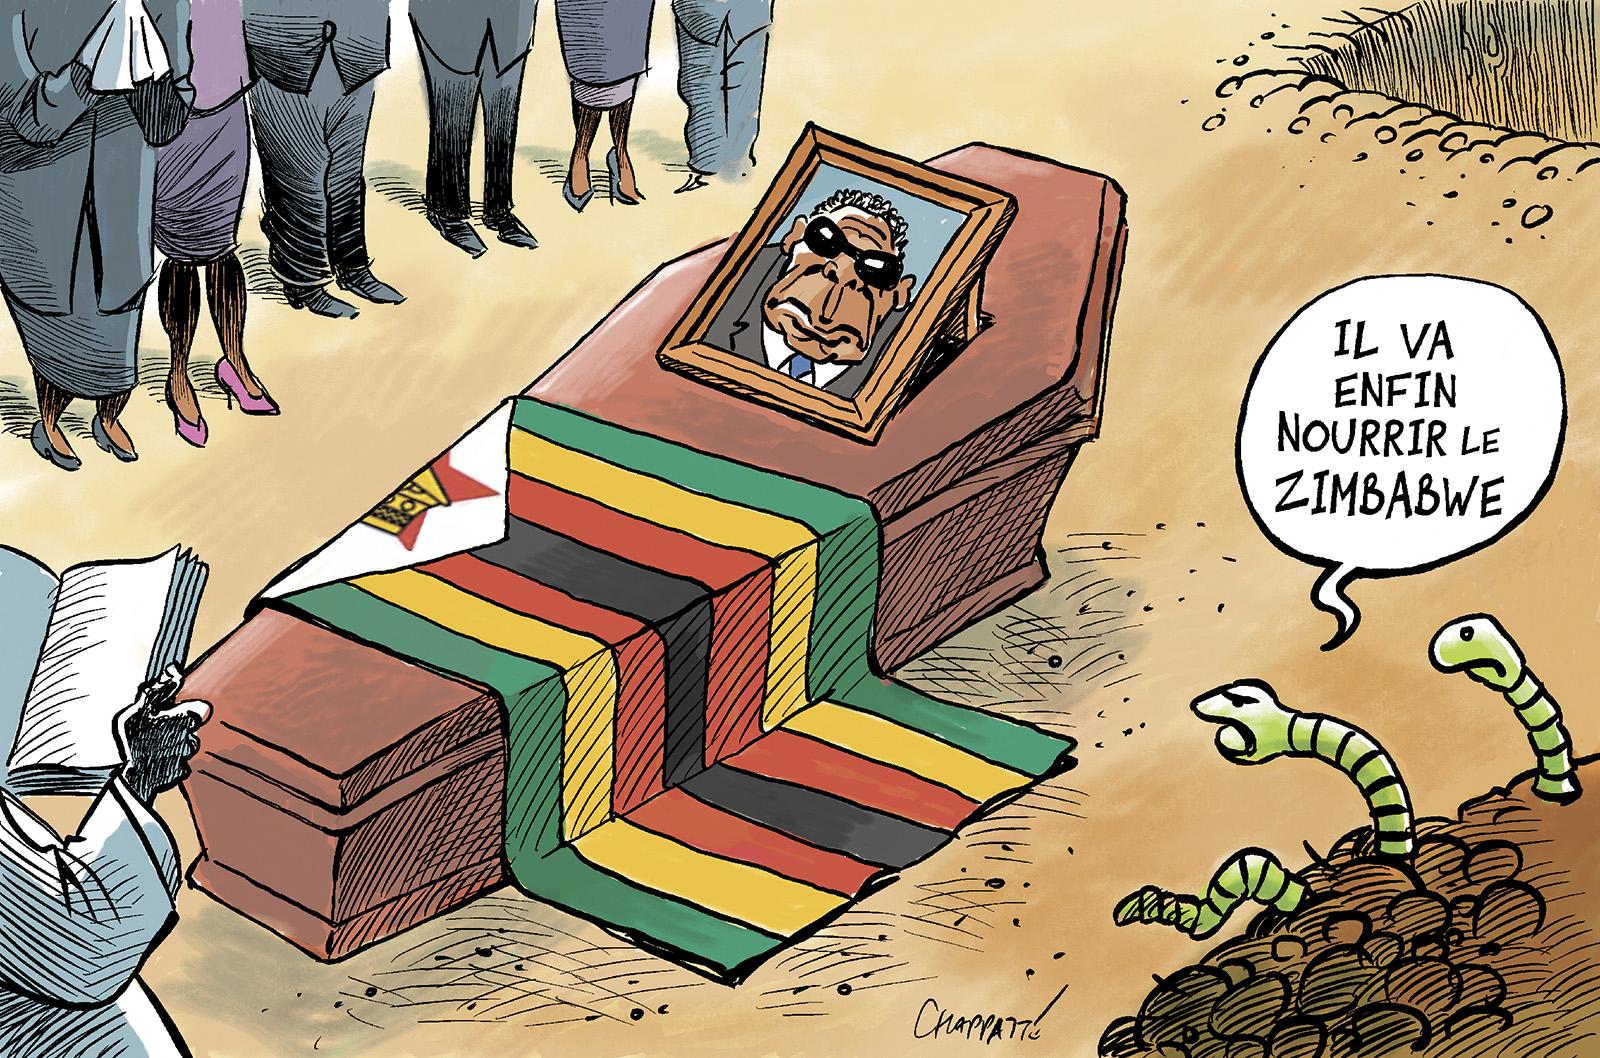 Death of Robert Mugabe